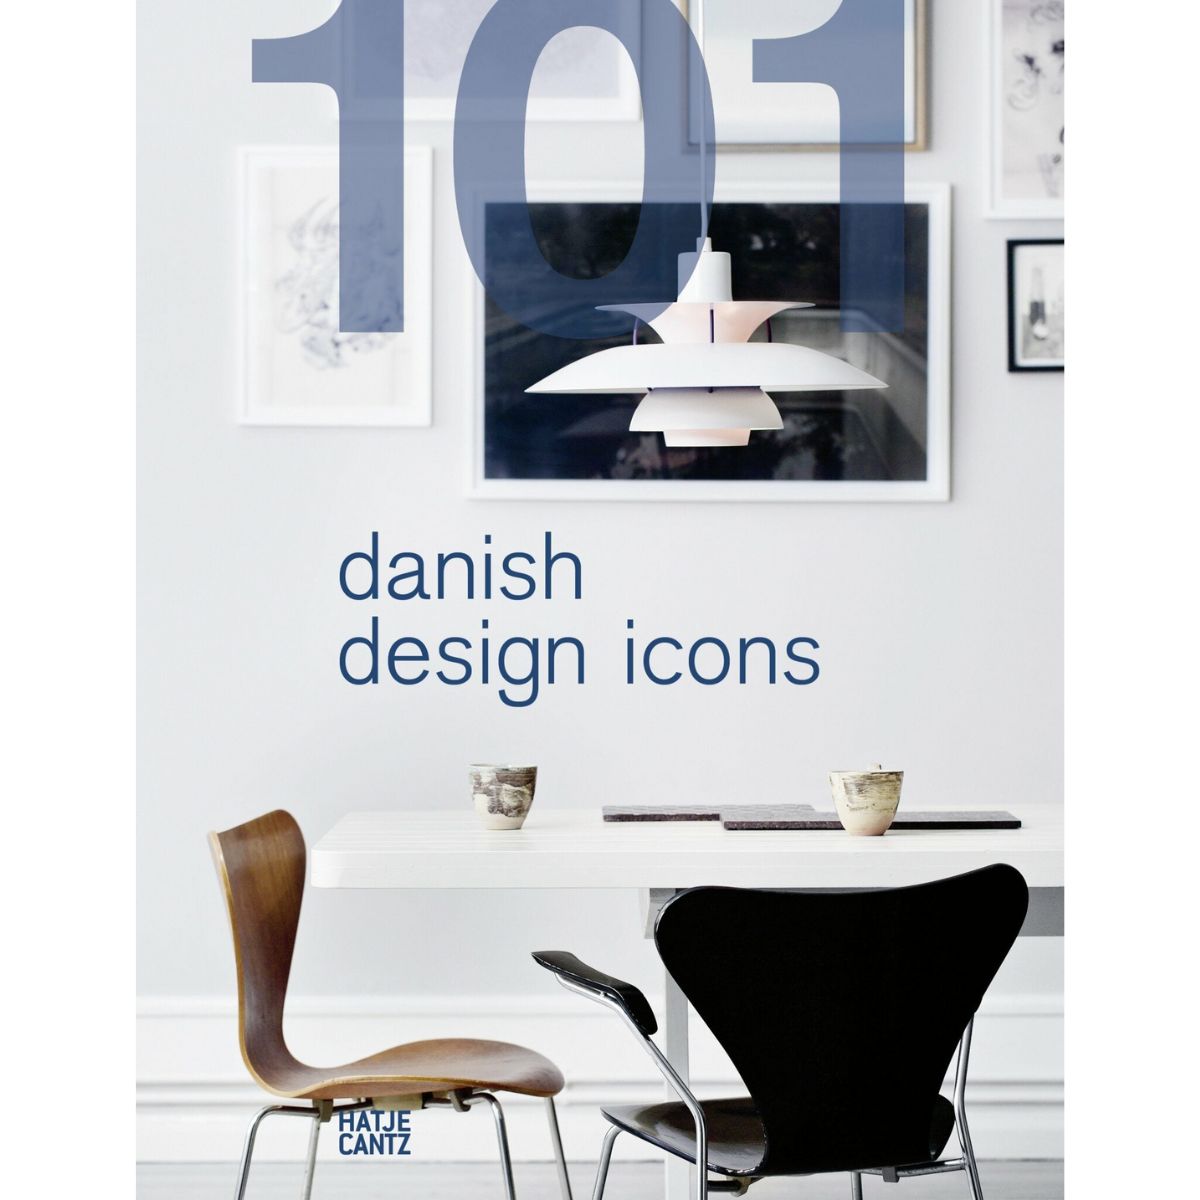 Hintsdeco Books Βιβλίο Τέχνης Βιβλίο Τέχνης 101 Danish Design Icons Μπλε/Άσπρο 20,5×3×26,5 cm Hintsdeco